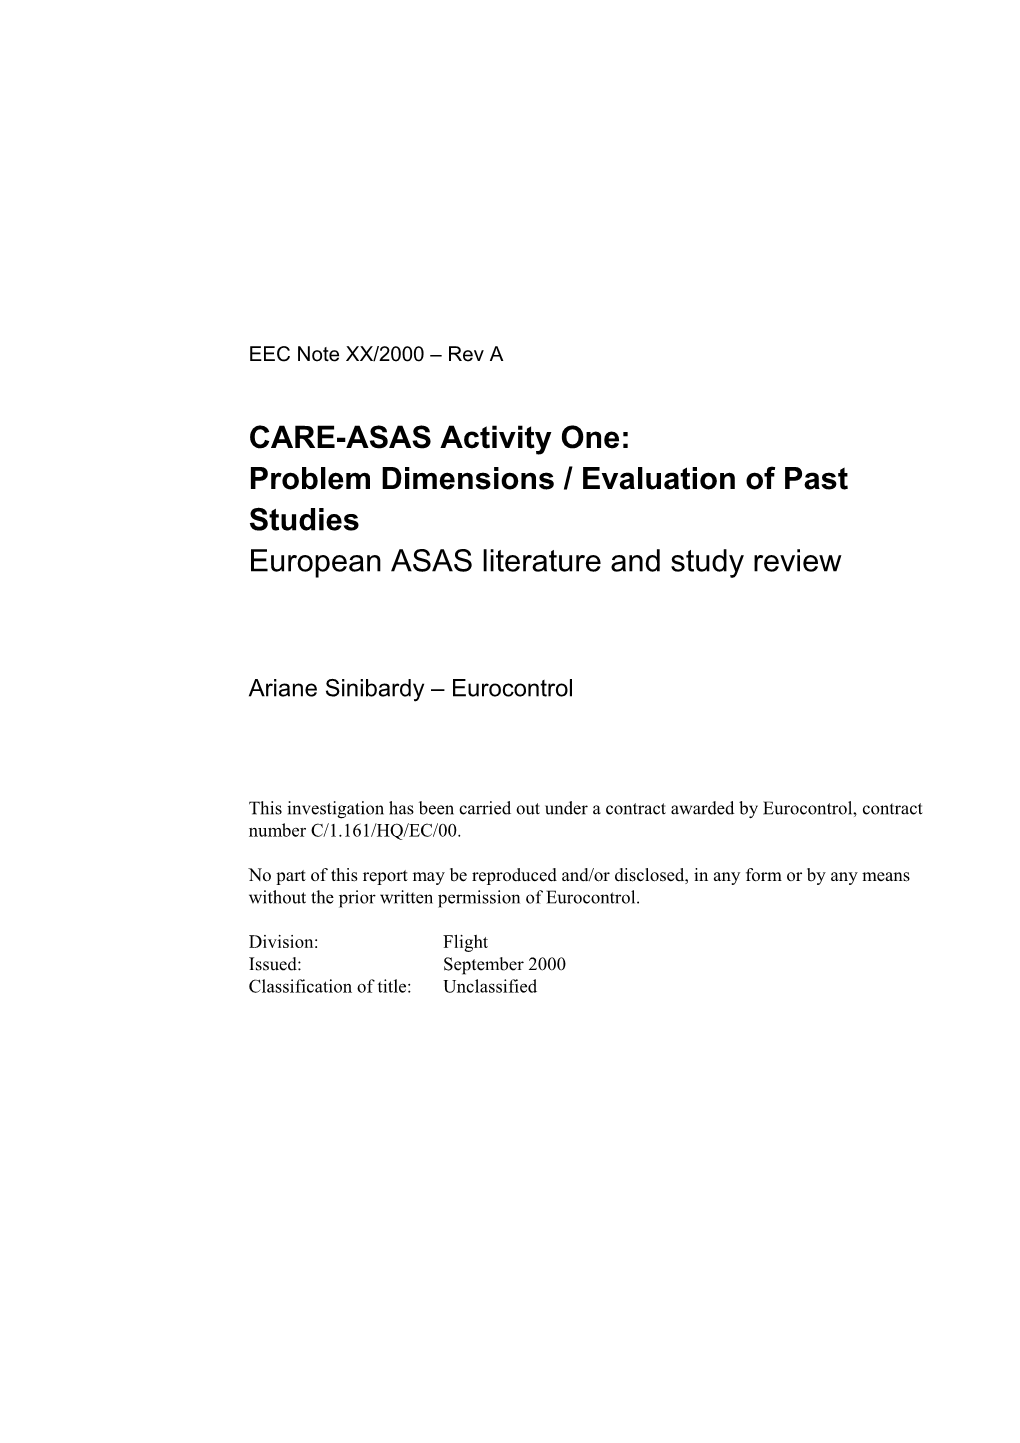 CARE-ASAS Activity One